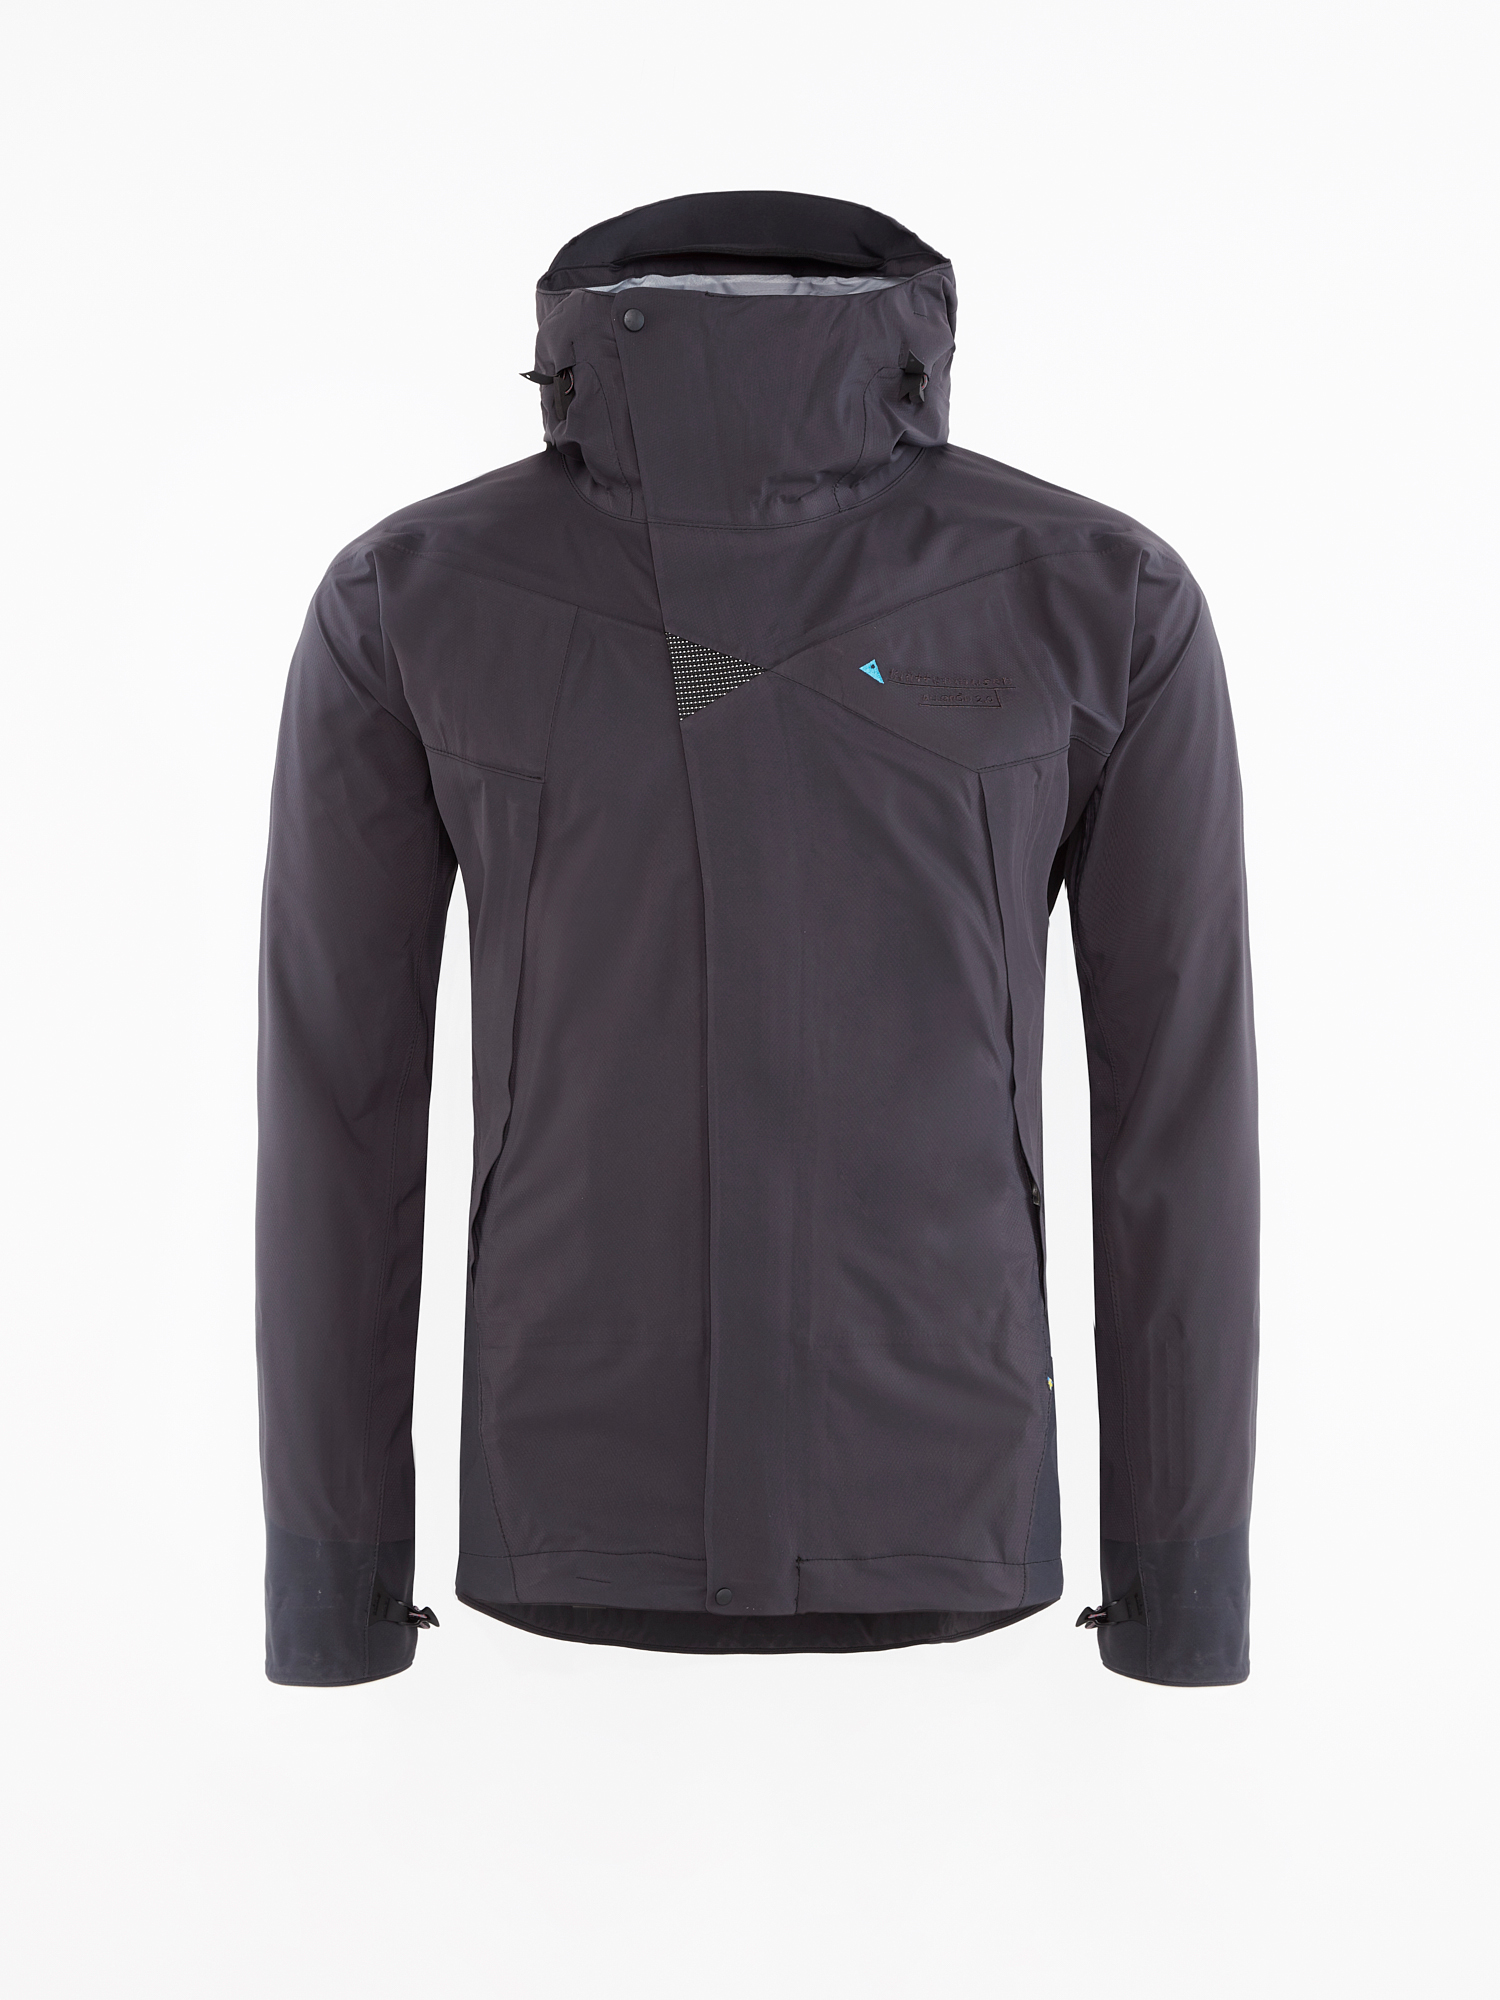 Men's waterproof hooded  jacket Allgrön 2.0 in the color Black/Raven color with Klättermusen logo on the chest. 